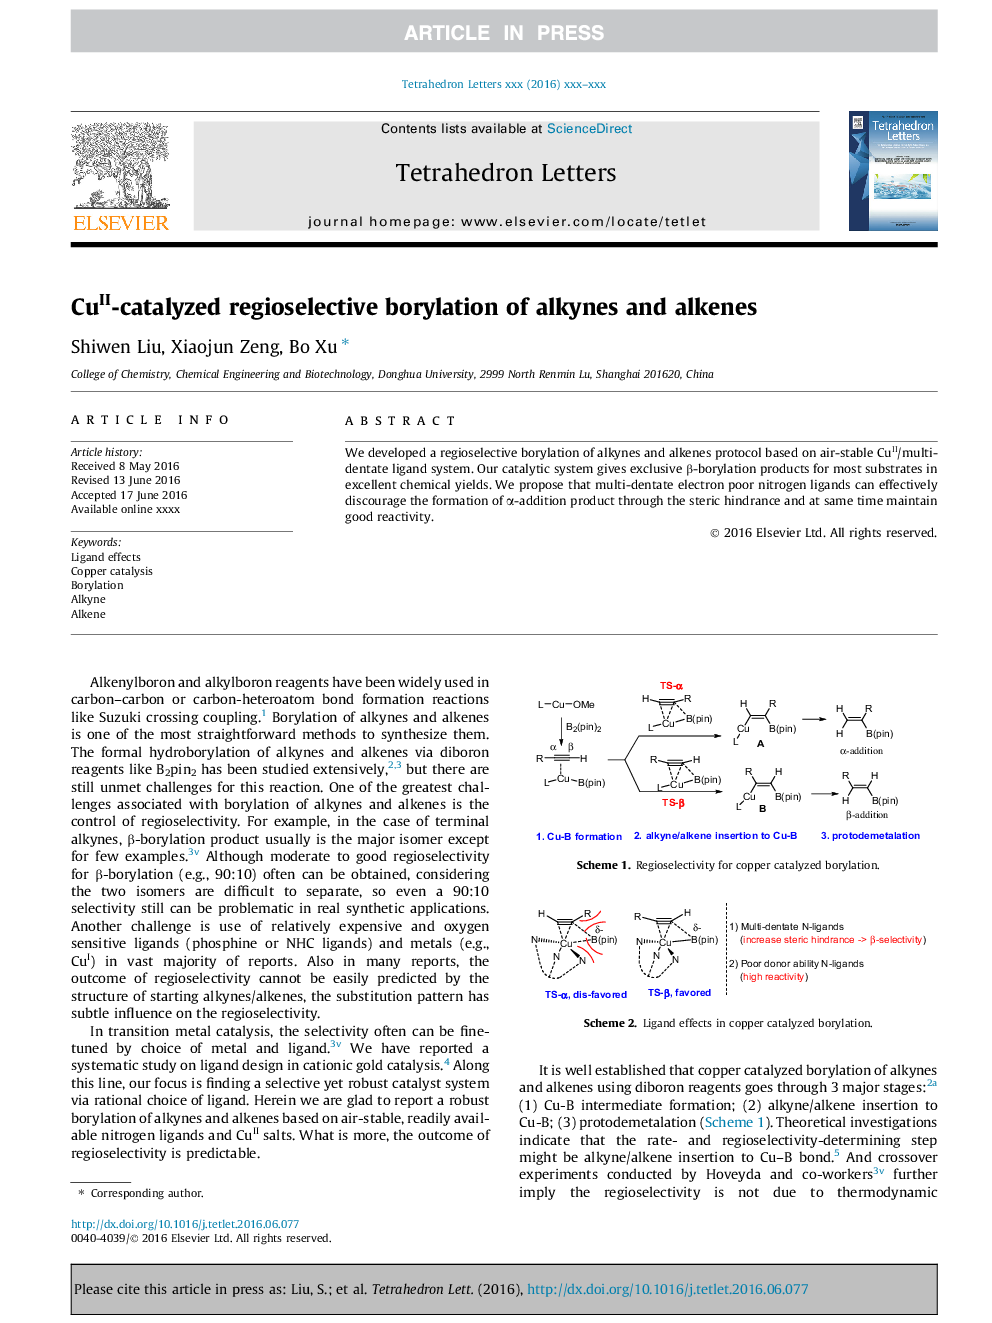 CuII-catalyzed regioselective borylation of alkynes and alkenes